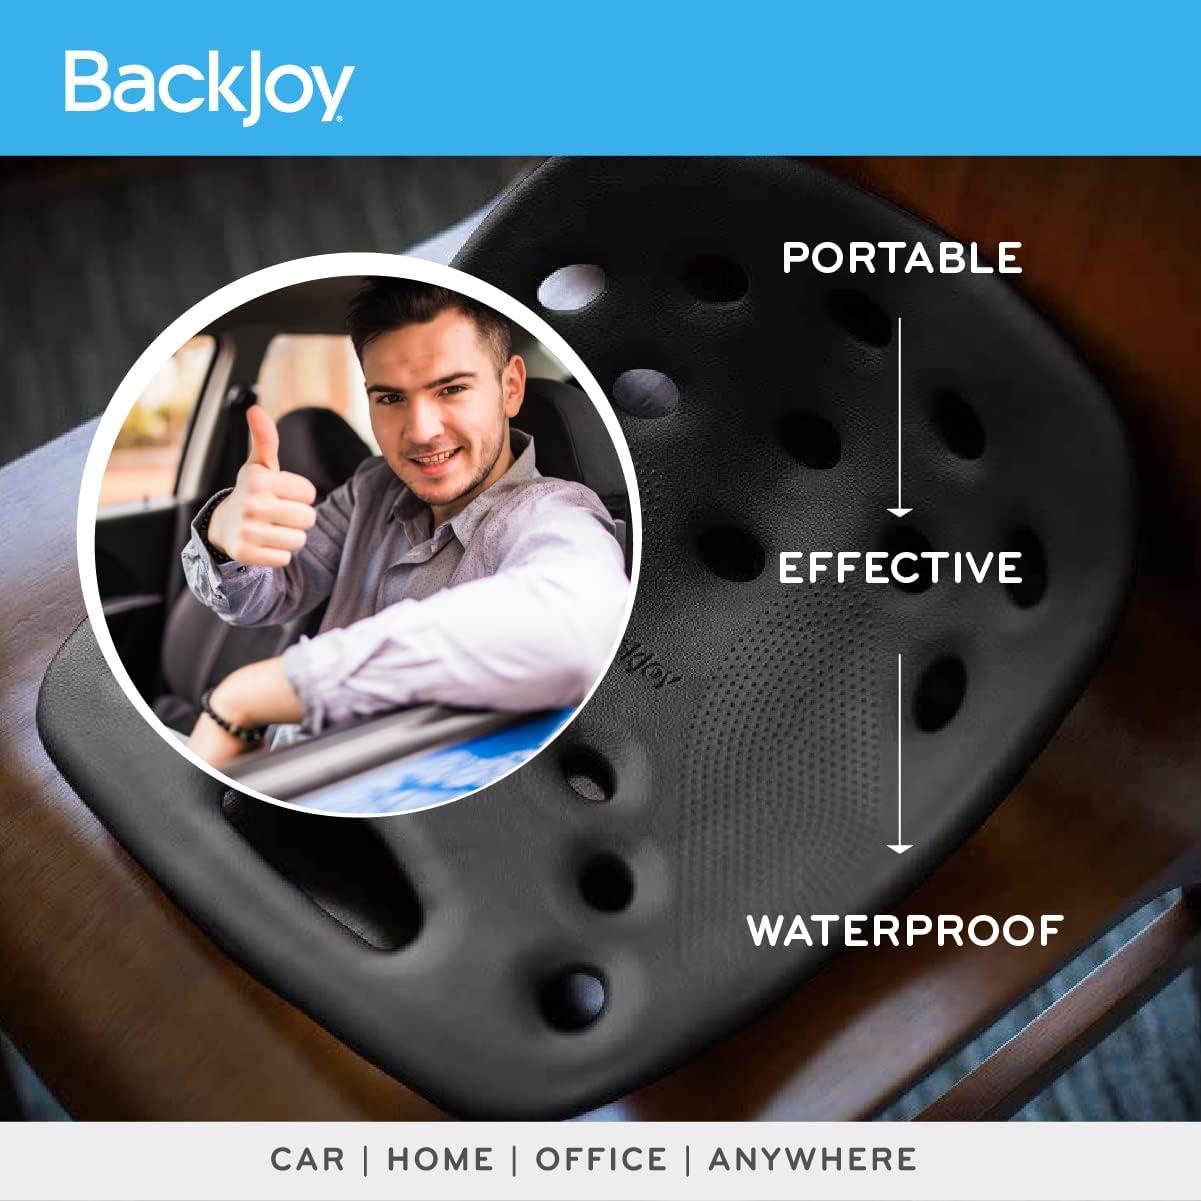 Backjoy Review, Improve Posture